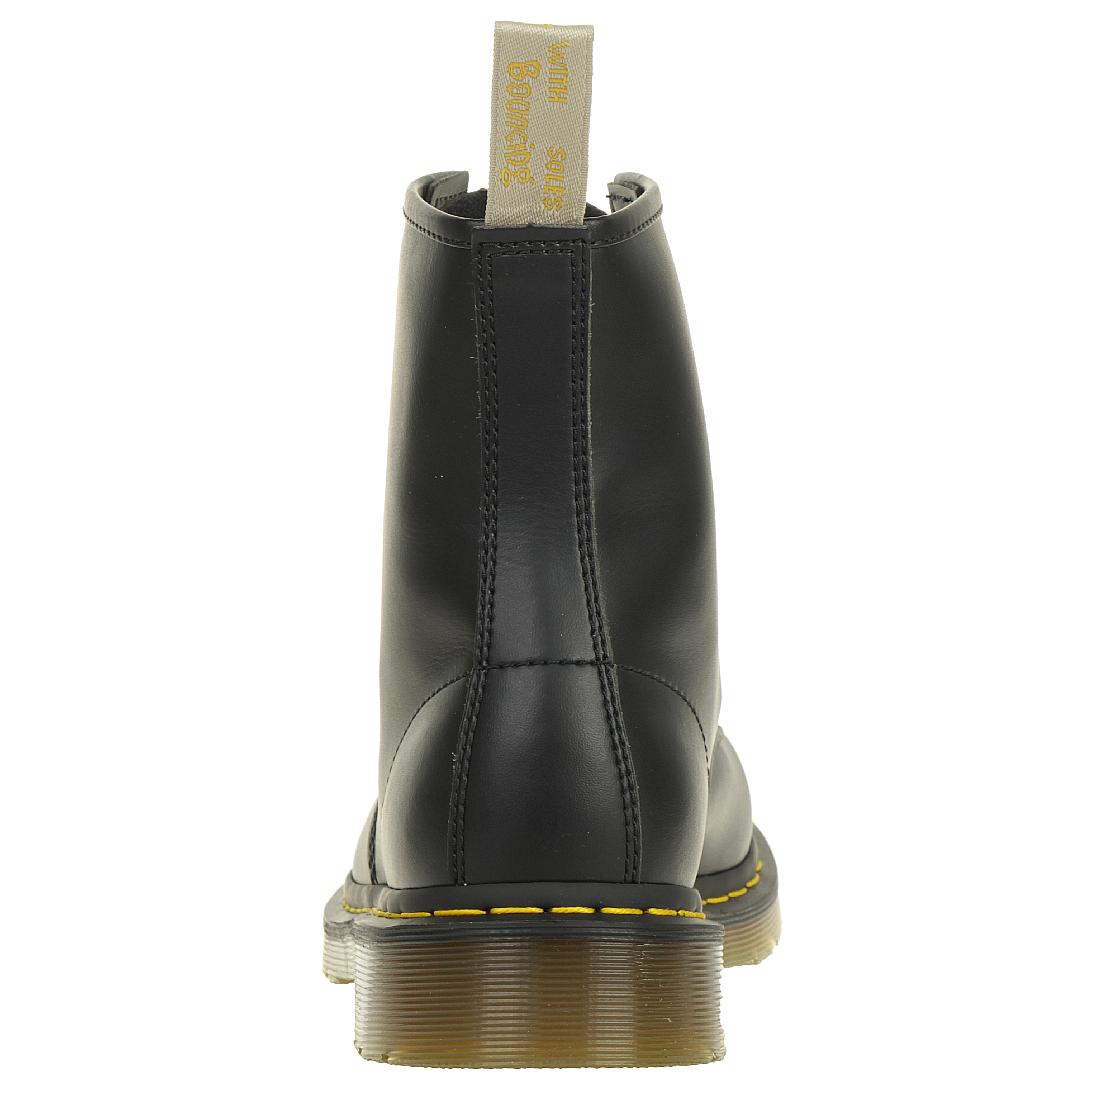 Dr. Martens 1460 Vegan Unisex Stiefel Boots black 14045001